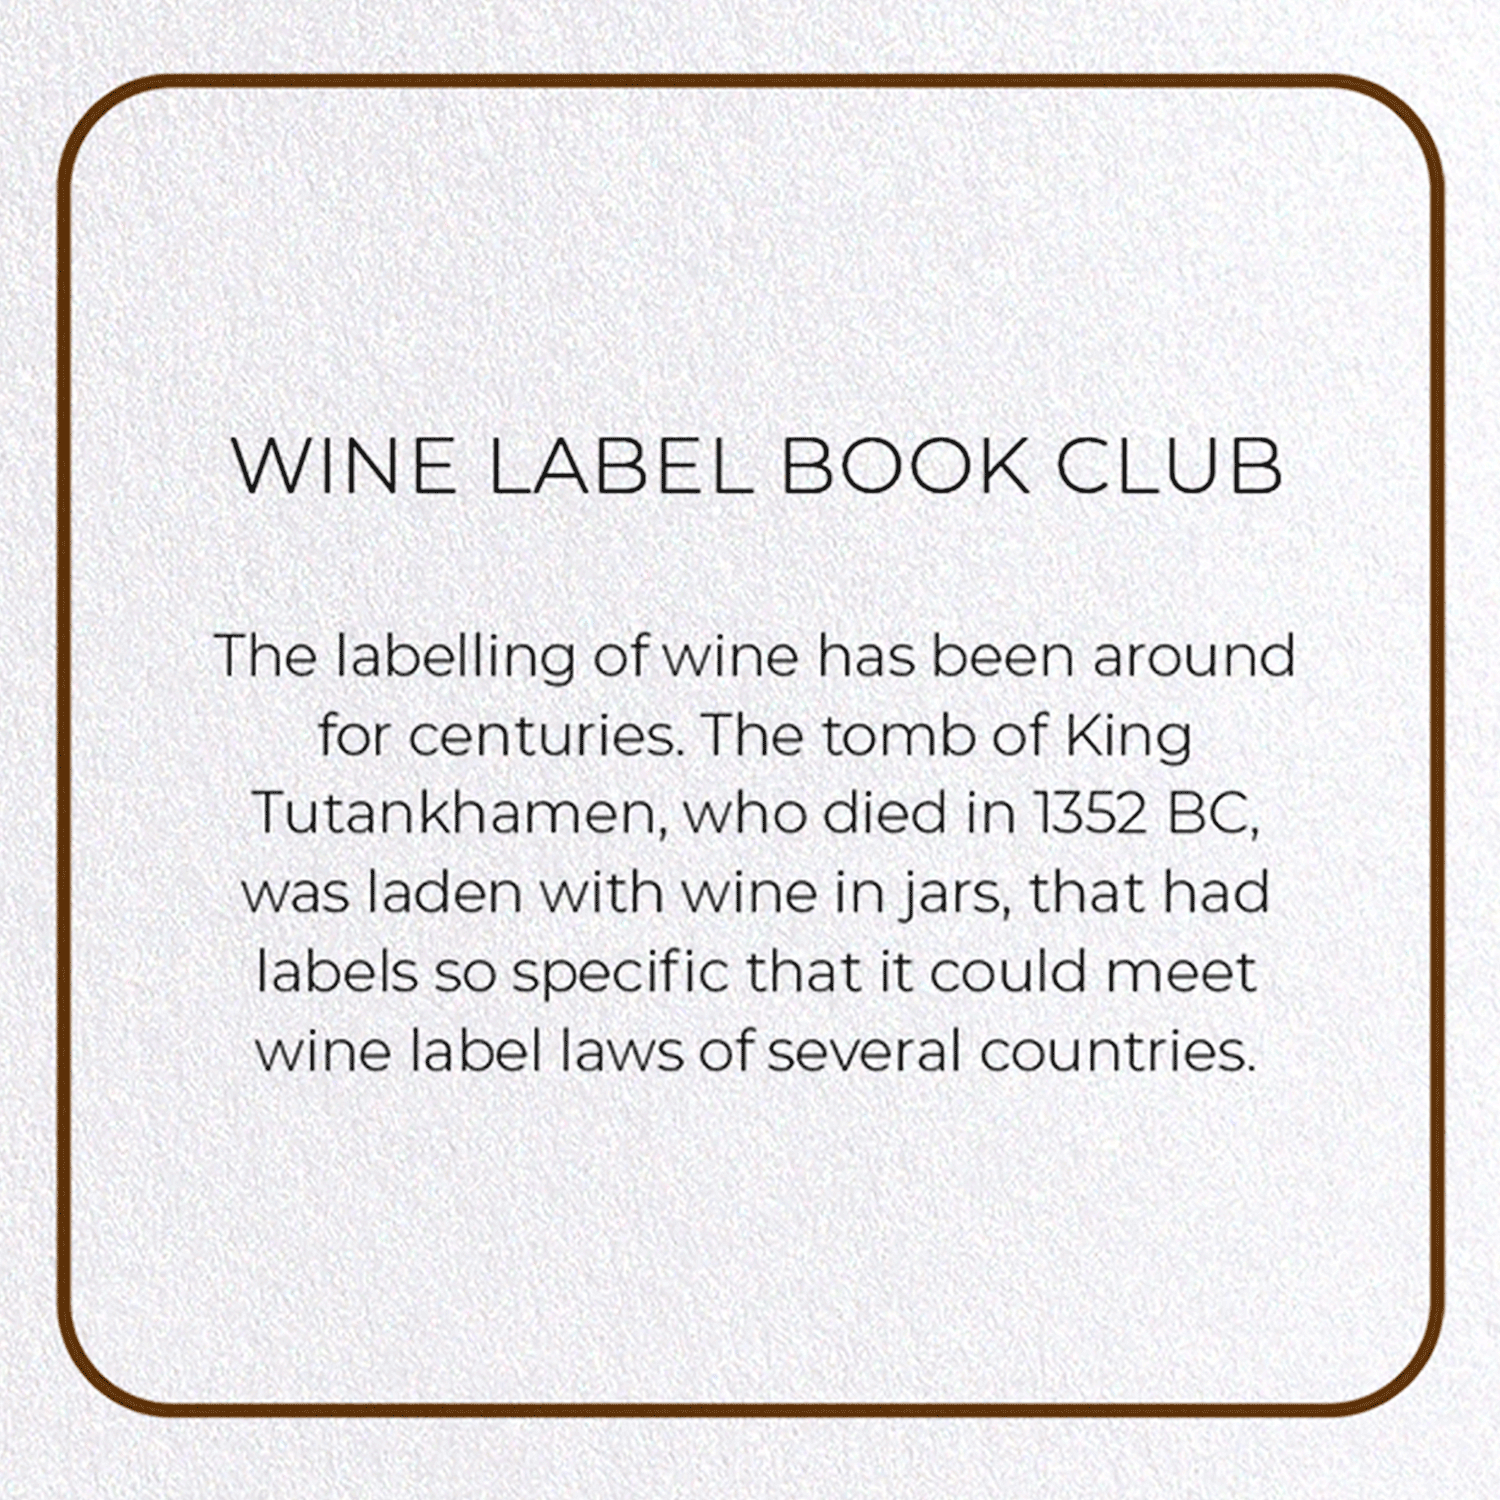 WINE LABEL BOOK CLUB: Photo Greeting Card